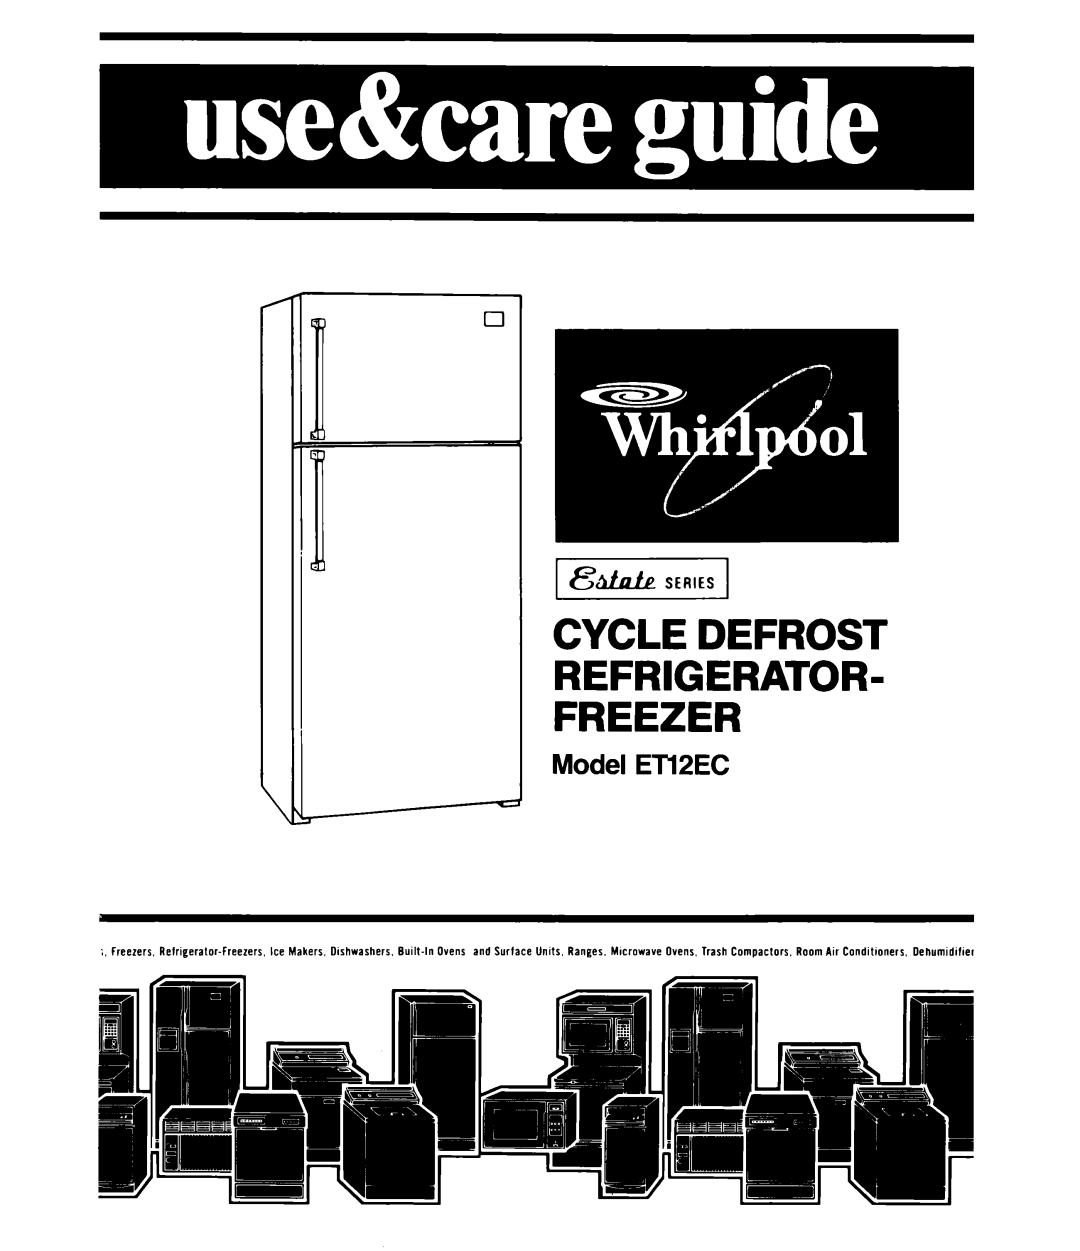 Whirlpool manual Cycle Defrost Refrigerator Freezer, Model ETl2EC 